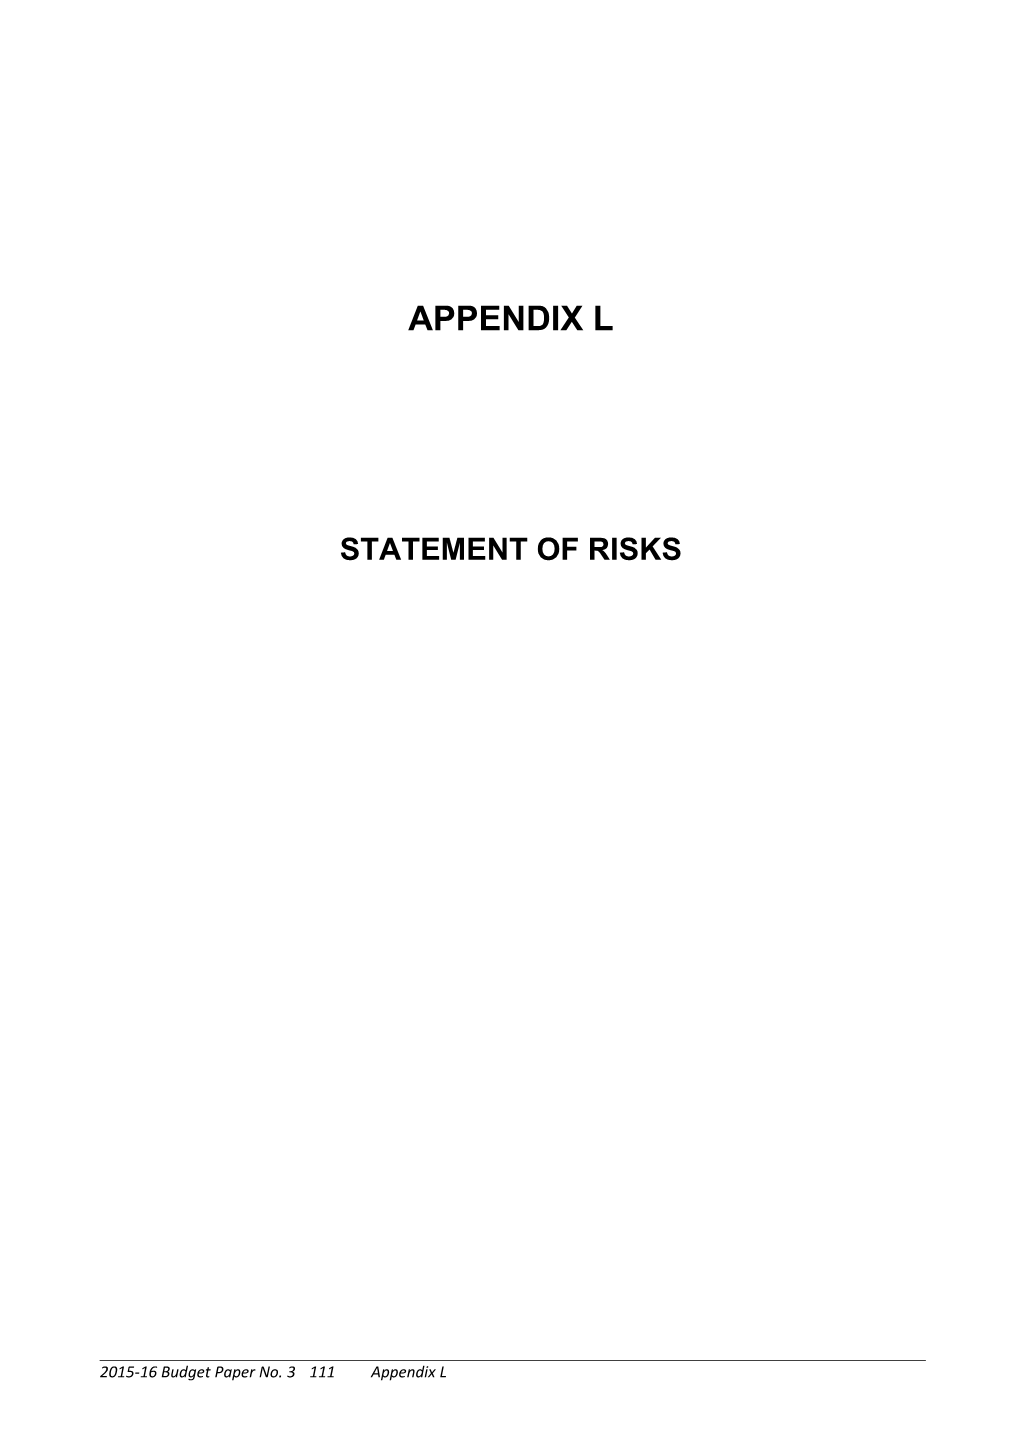 Statement of Risks